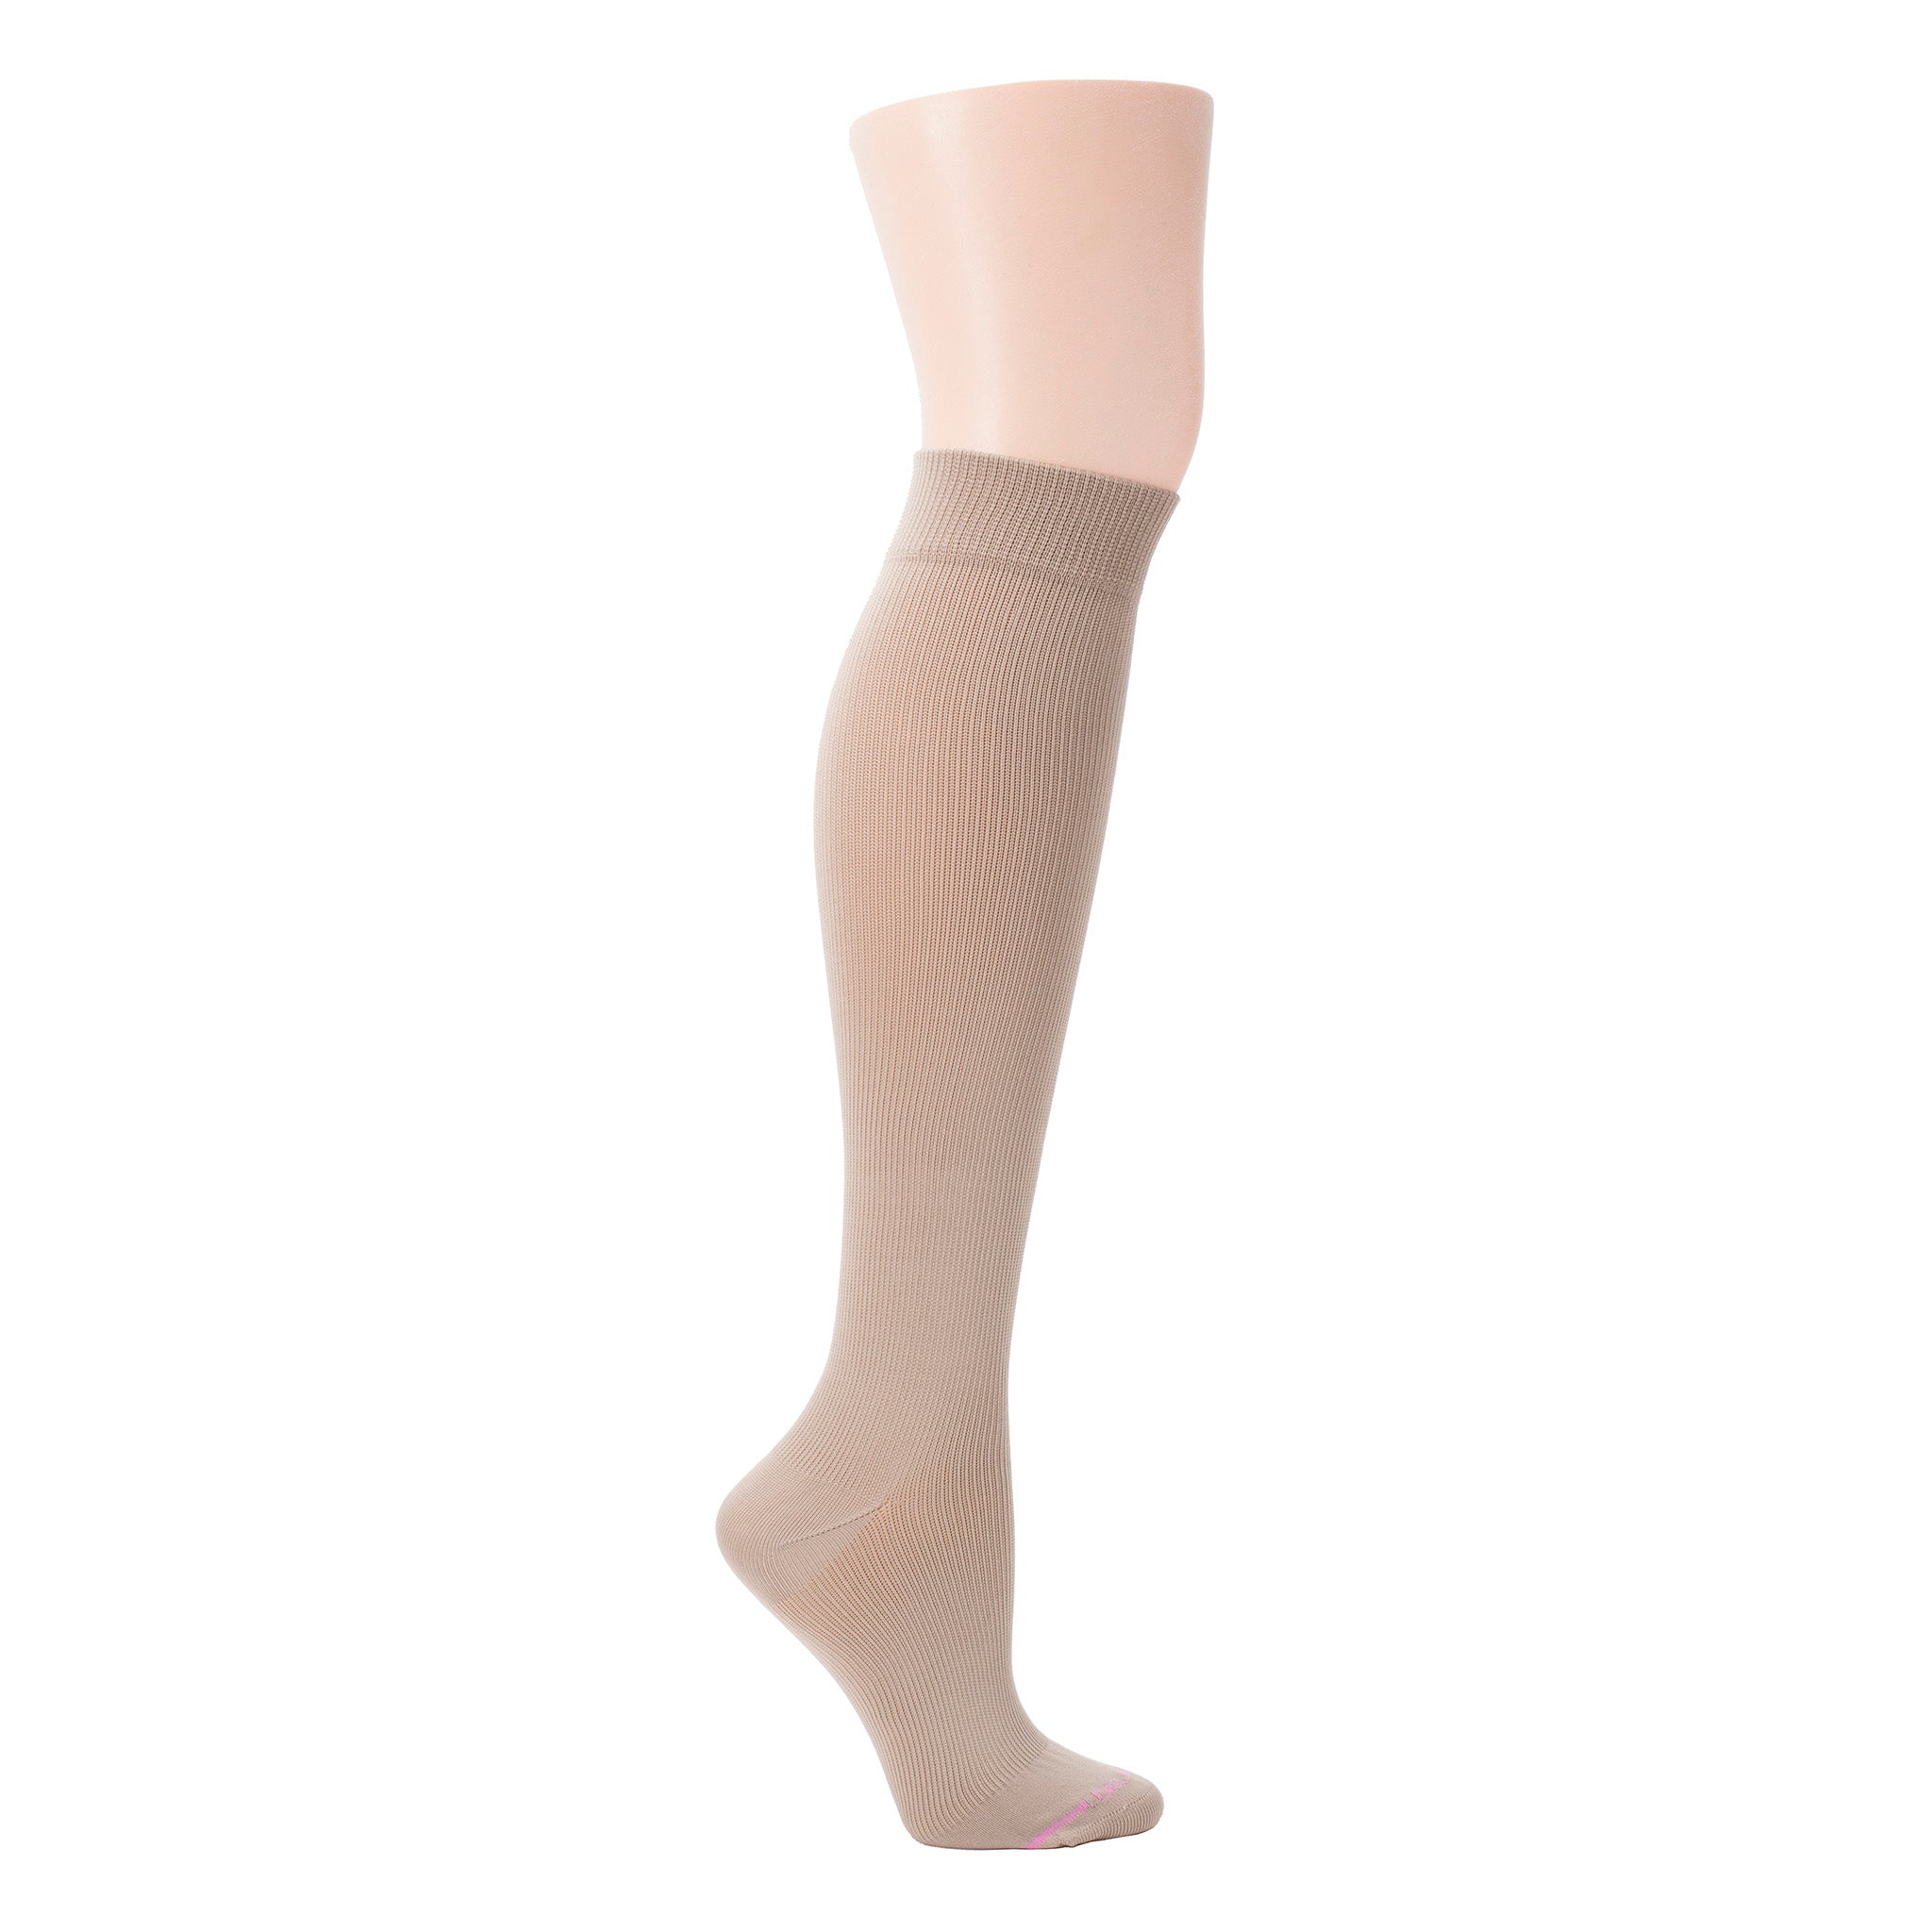 Knee-High Compression Socks For Women, Dr. Motion